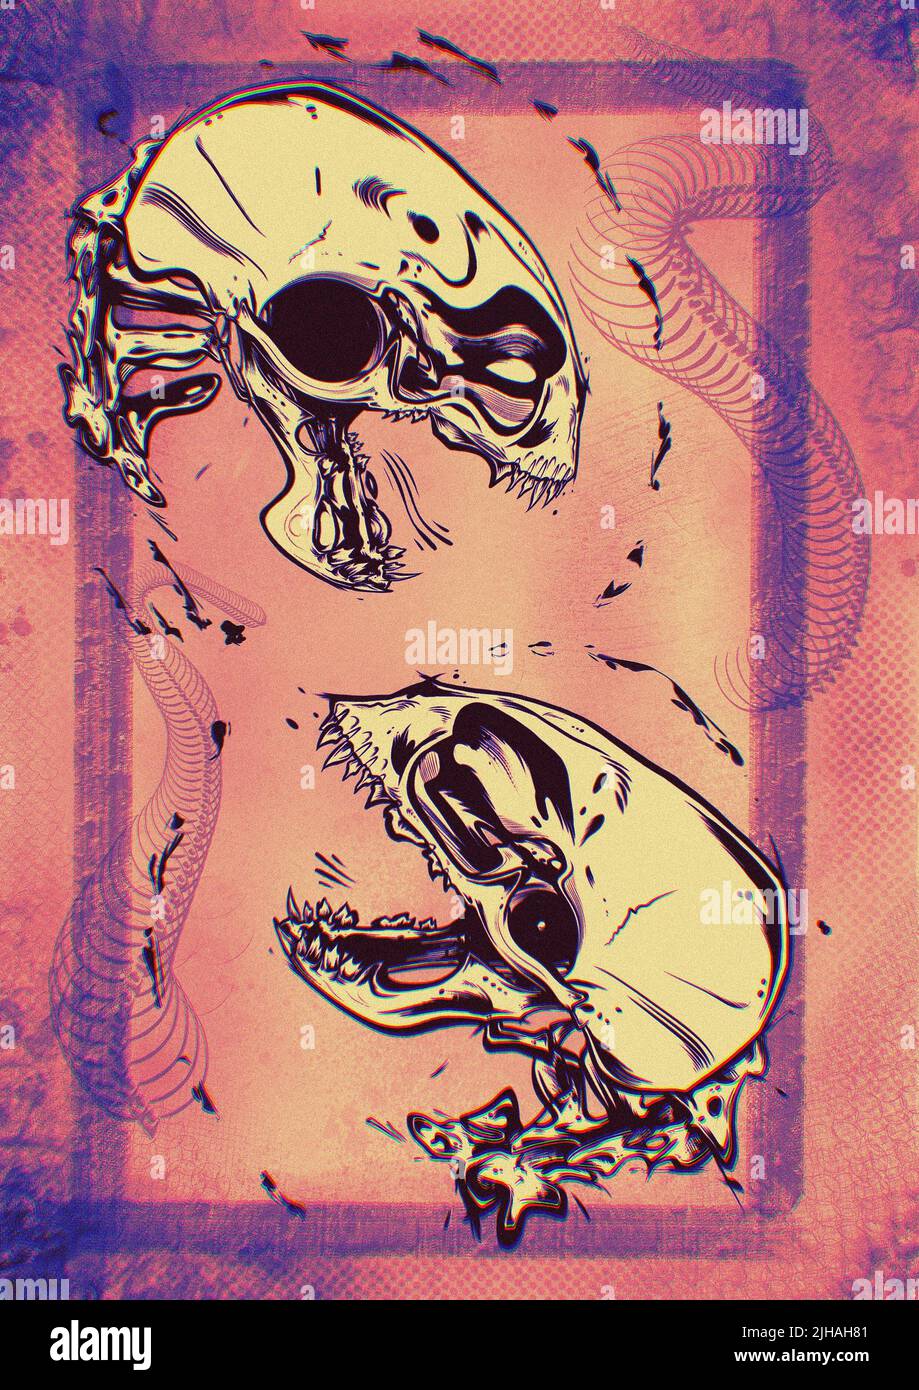 Bold Snake Skull Illustrated Tattoo Poster Art Print. Anatomy Drawing Design. Stock Photo